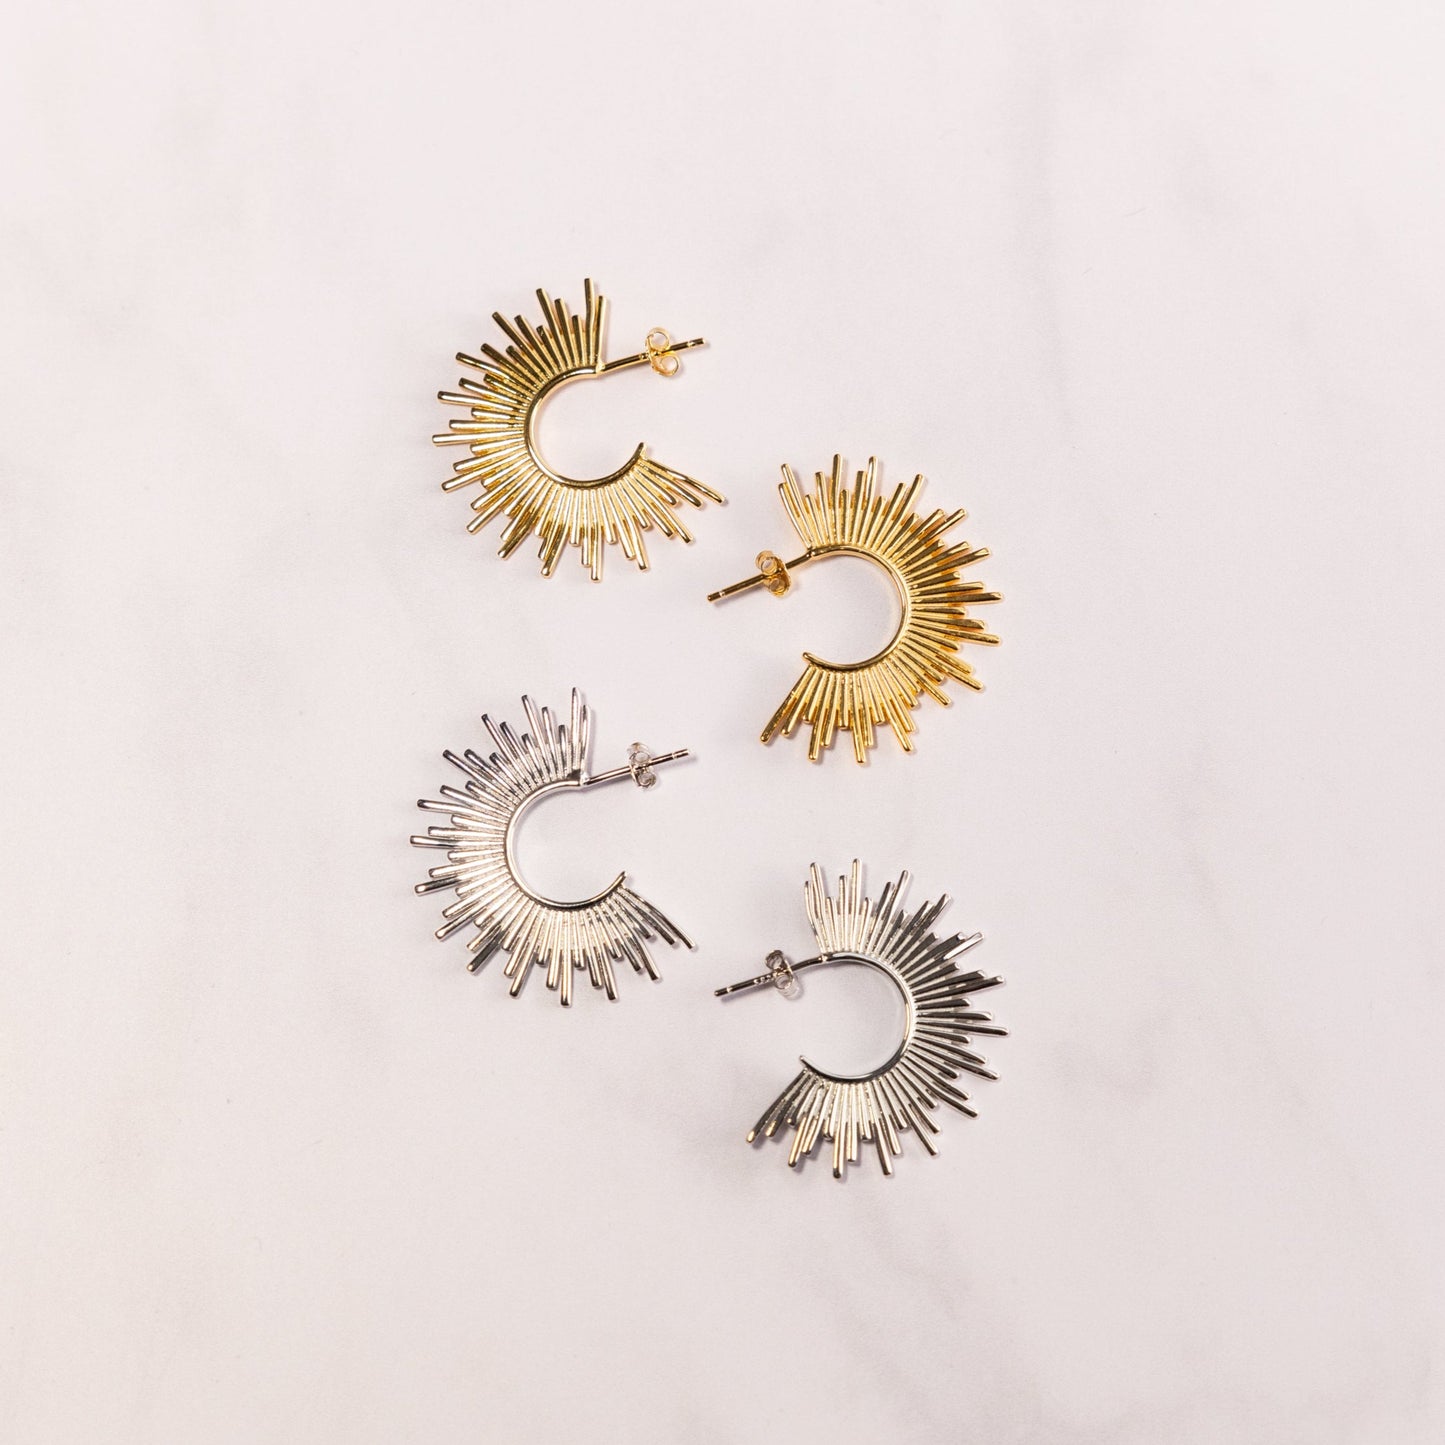 Marissa Sunburst Necklace & Earring Gift Set